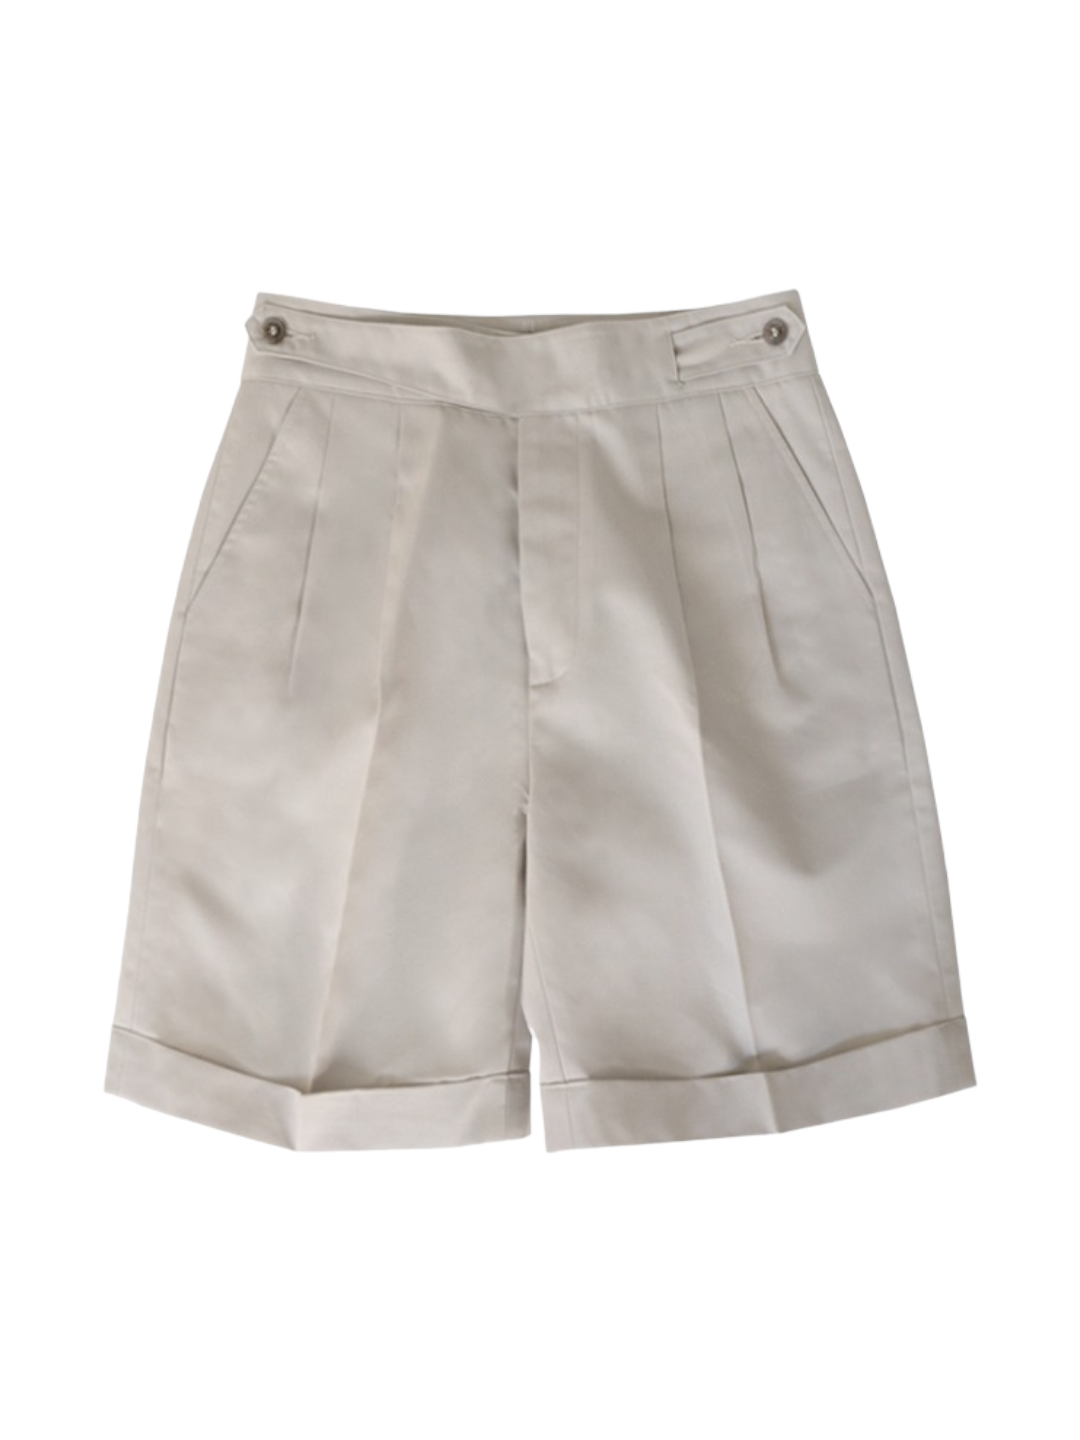 (BYU) Gurkha Shorts (Beige)